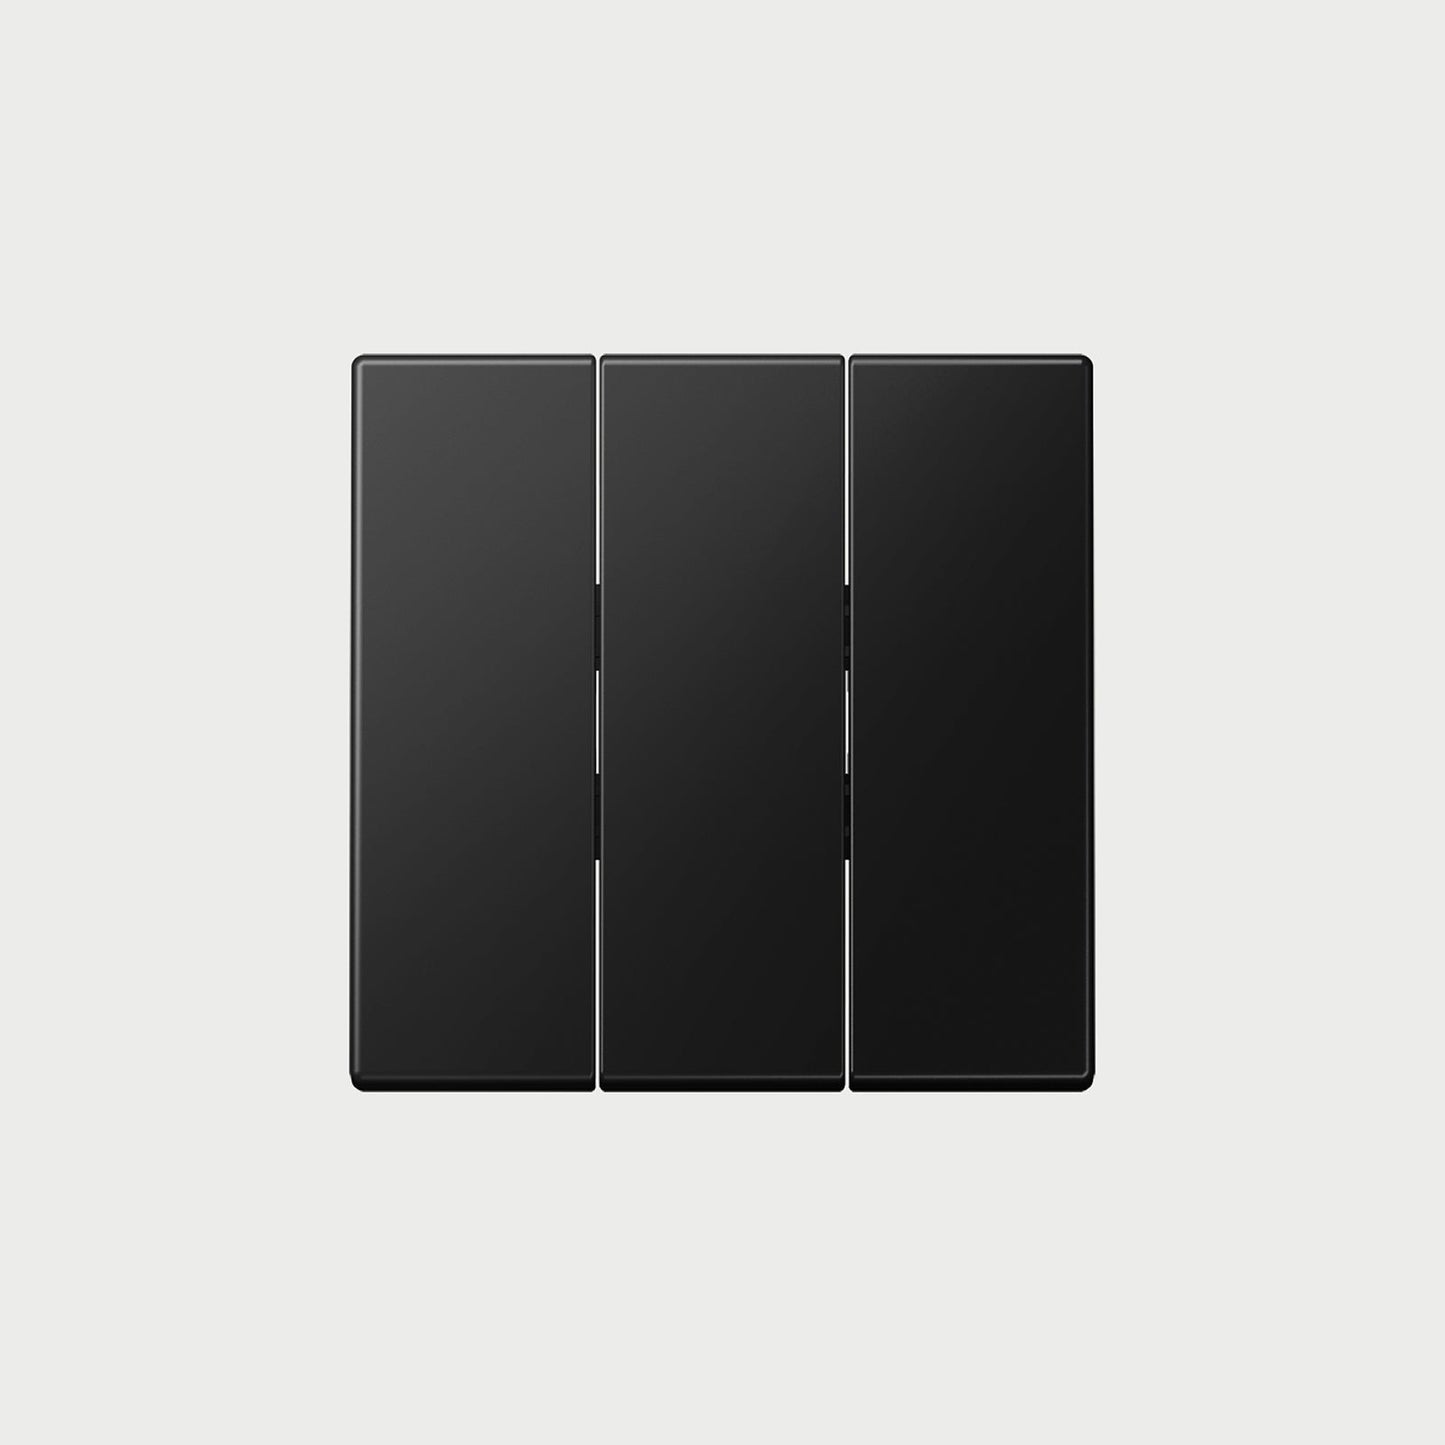 Ls993 (Plastic) Matt Graphite Black Cover